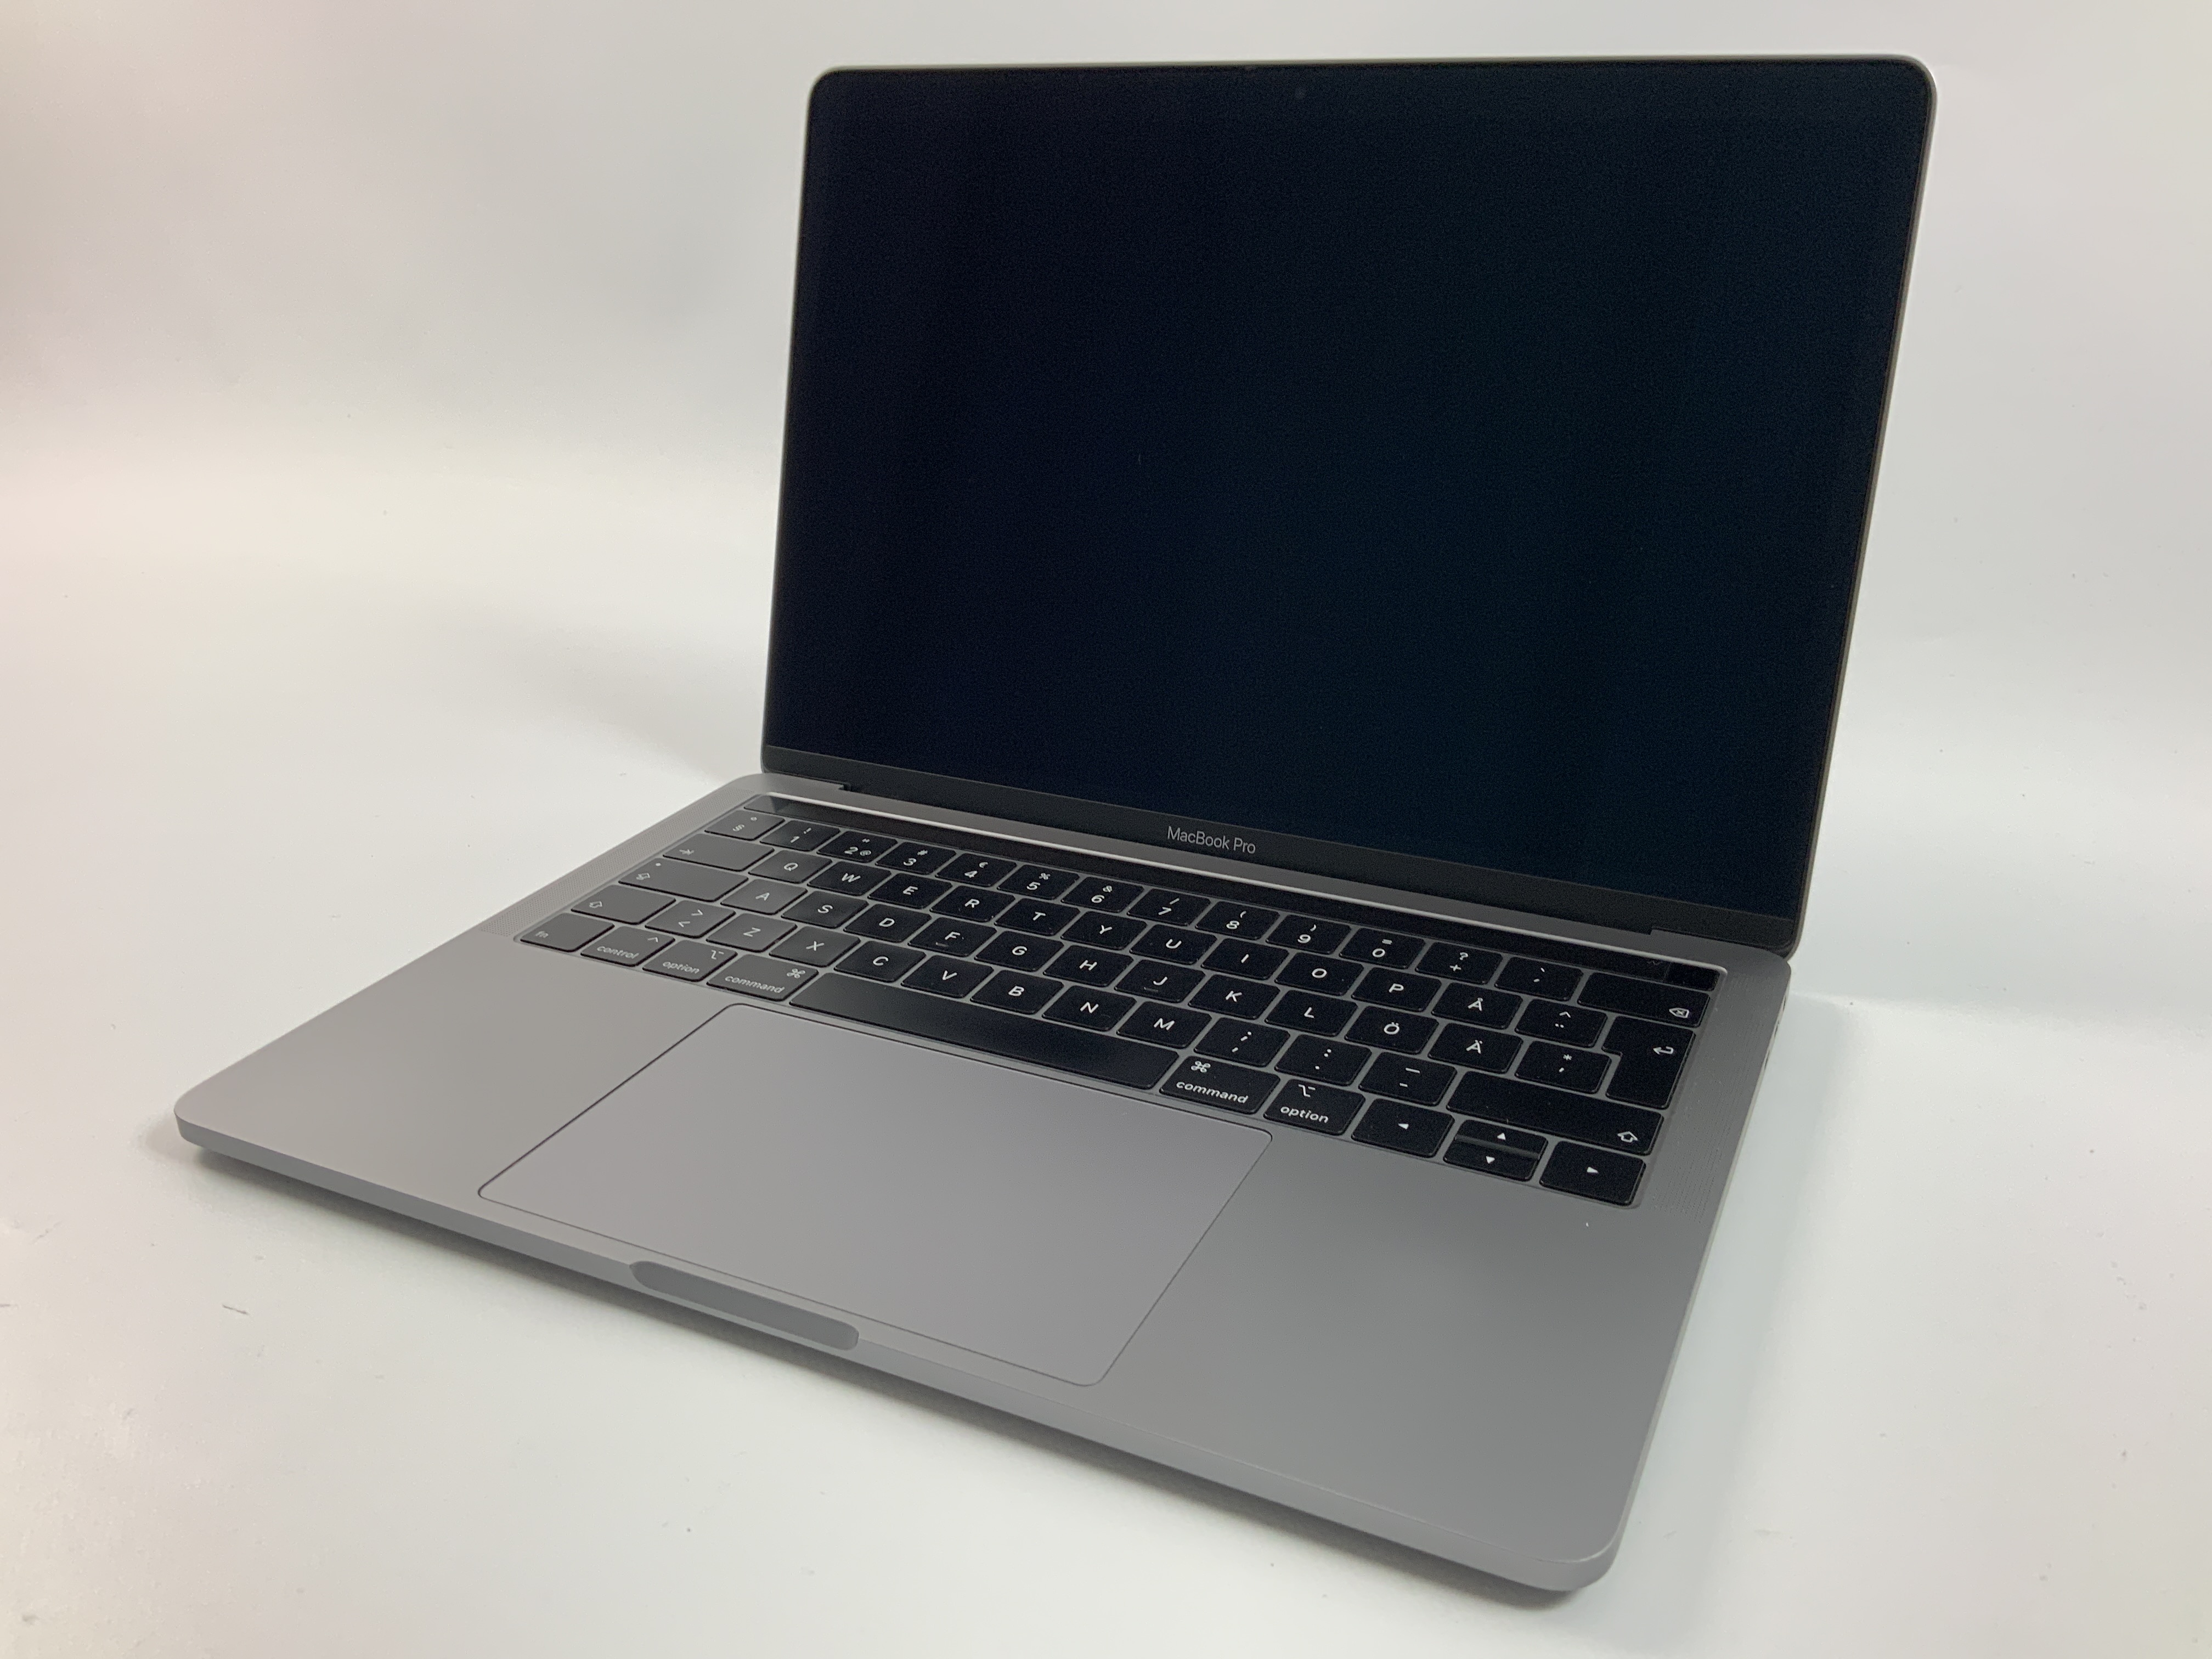 MacBook Pro 13" 4TBT Mid 2019 (Intel Quad-Core i7 2.8 GHz 16 GB RAM 256 GB SSD), Space Gray, Intel Quad-Core i7 2.8 GHz, 16 GB RAM, 256 GB SSD, imagen 1